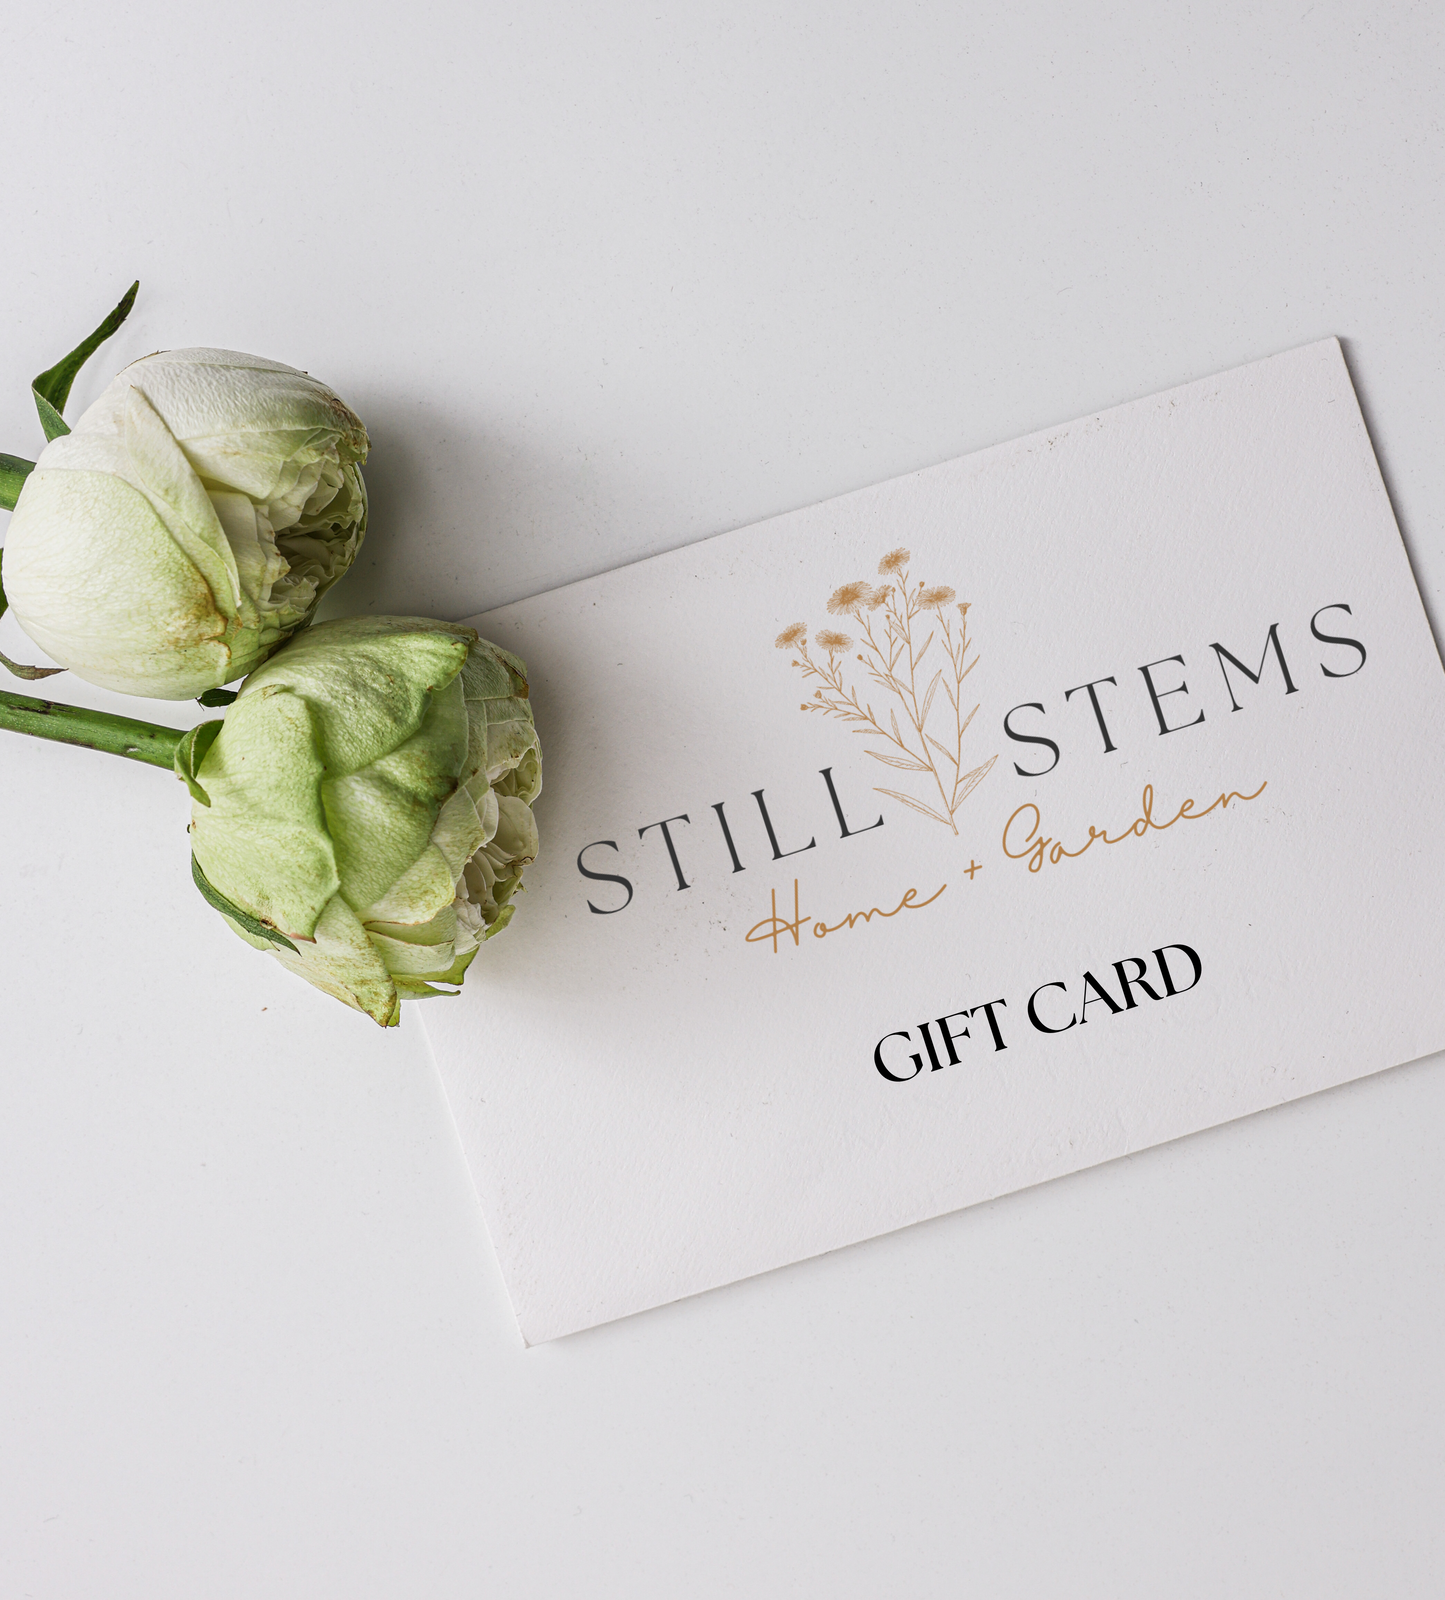 Still Stems Home + Garden Gift Card - Still Stems Home & Garden